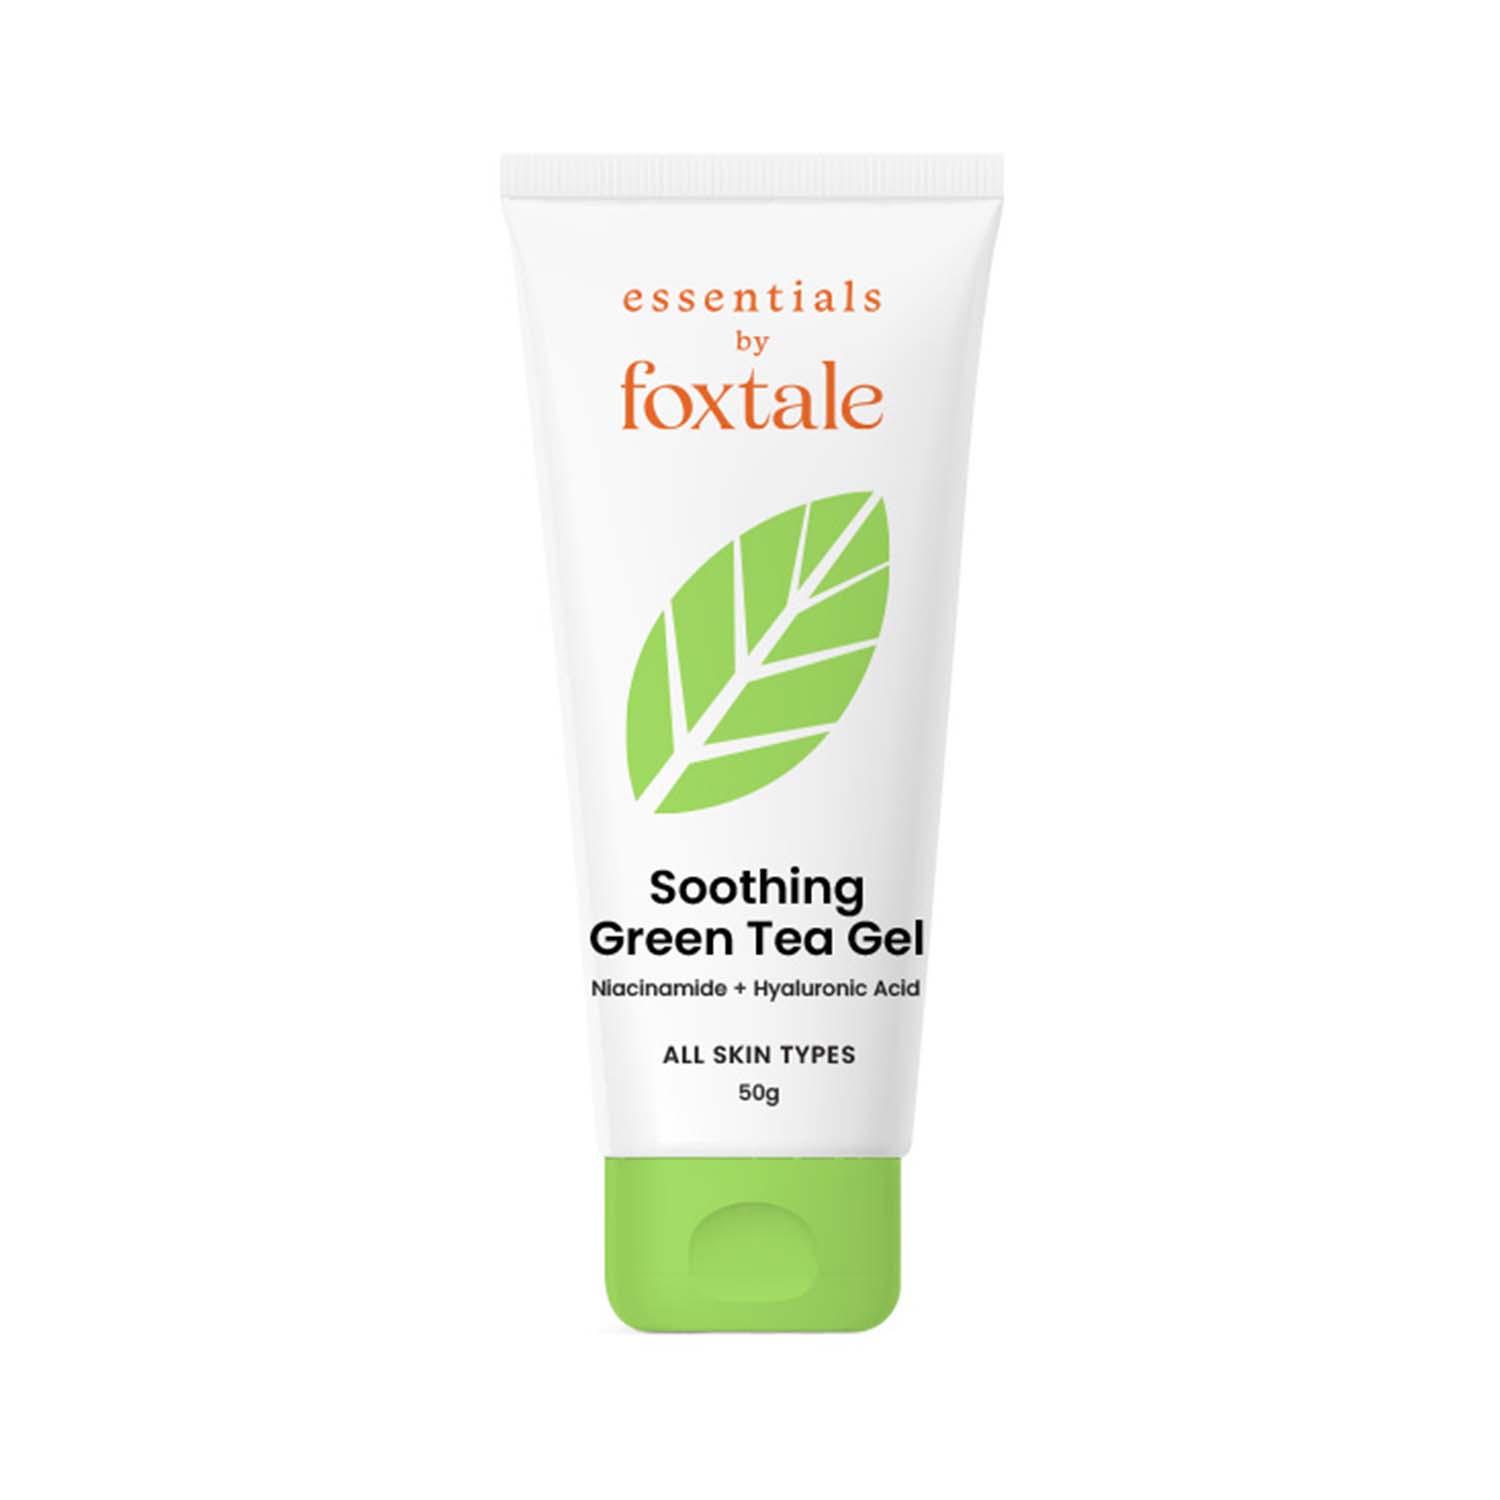 Foxtale Essentials Soothing Green Tea Gel (50g)